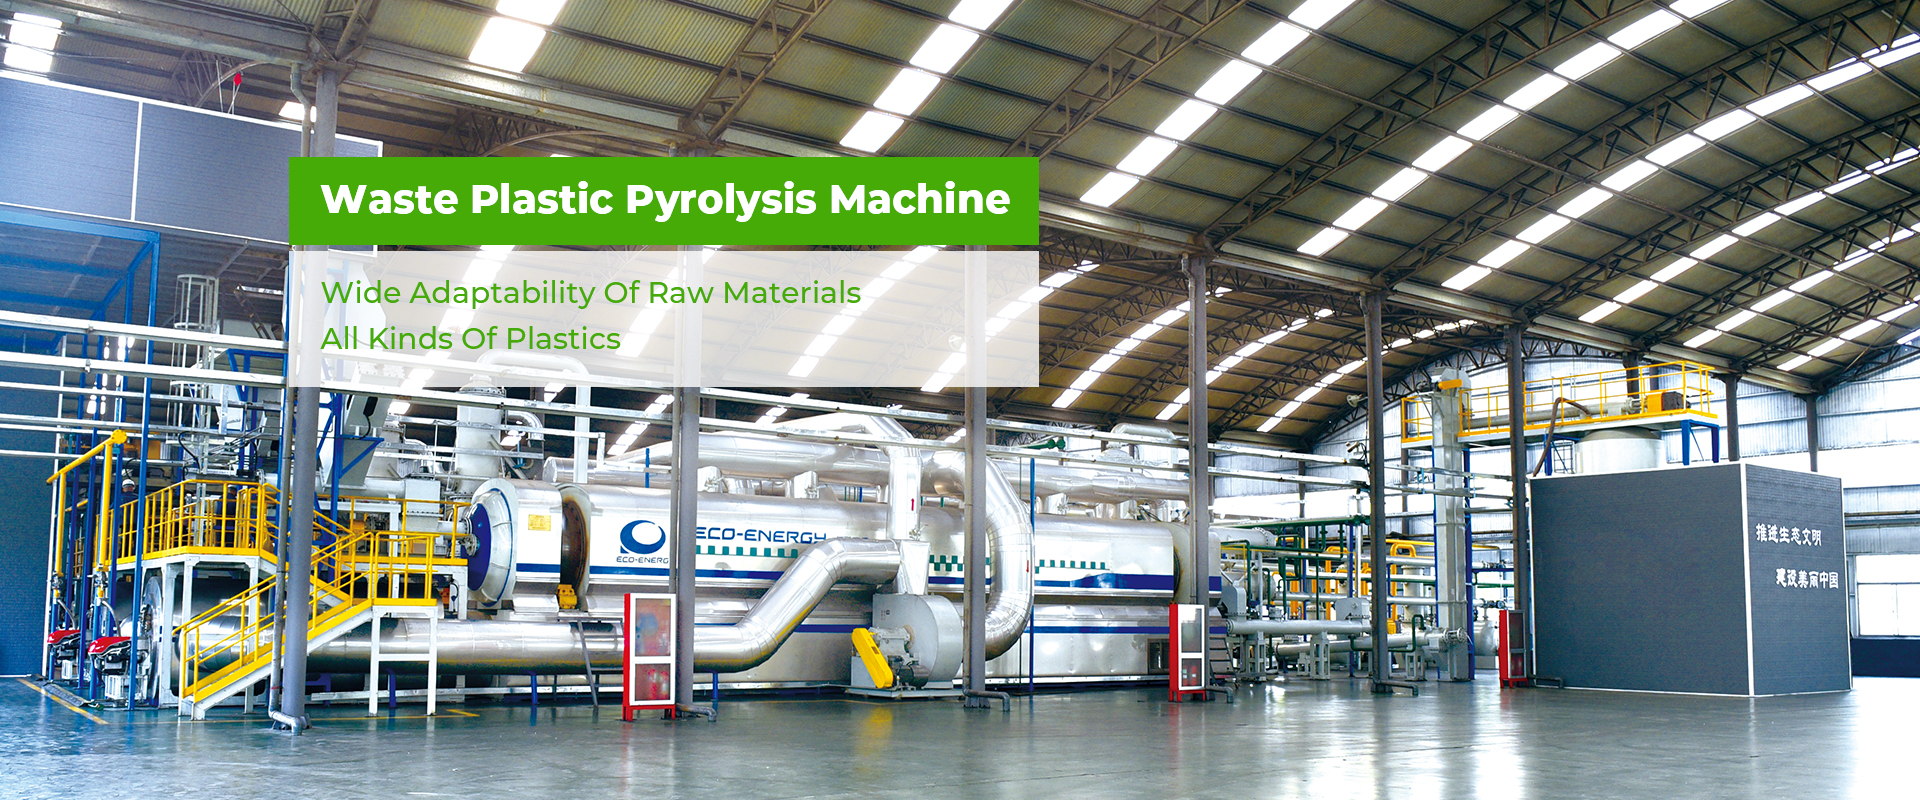 Waste Plastic Pyrolysis Machine